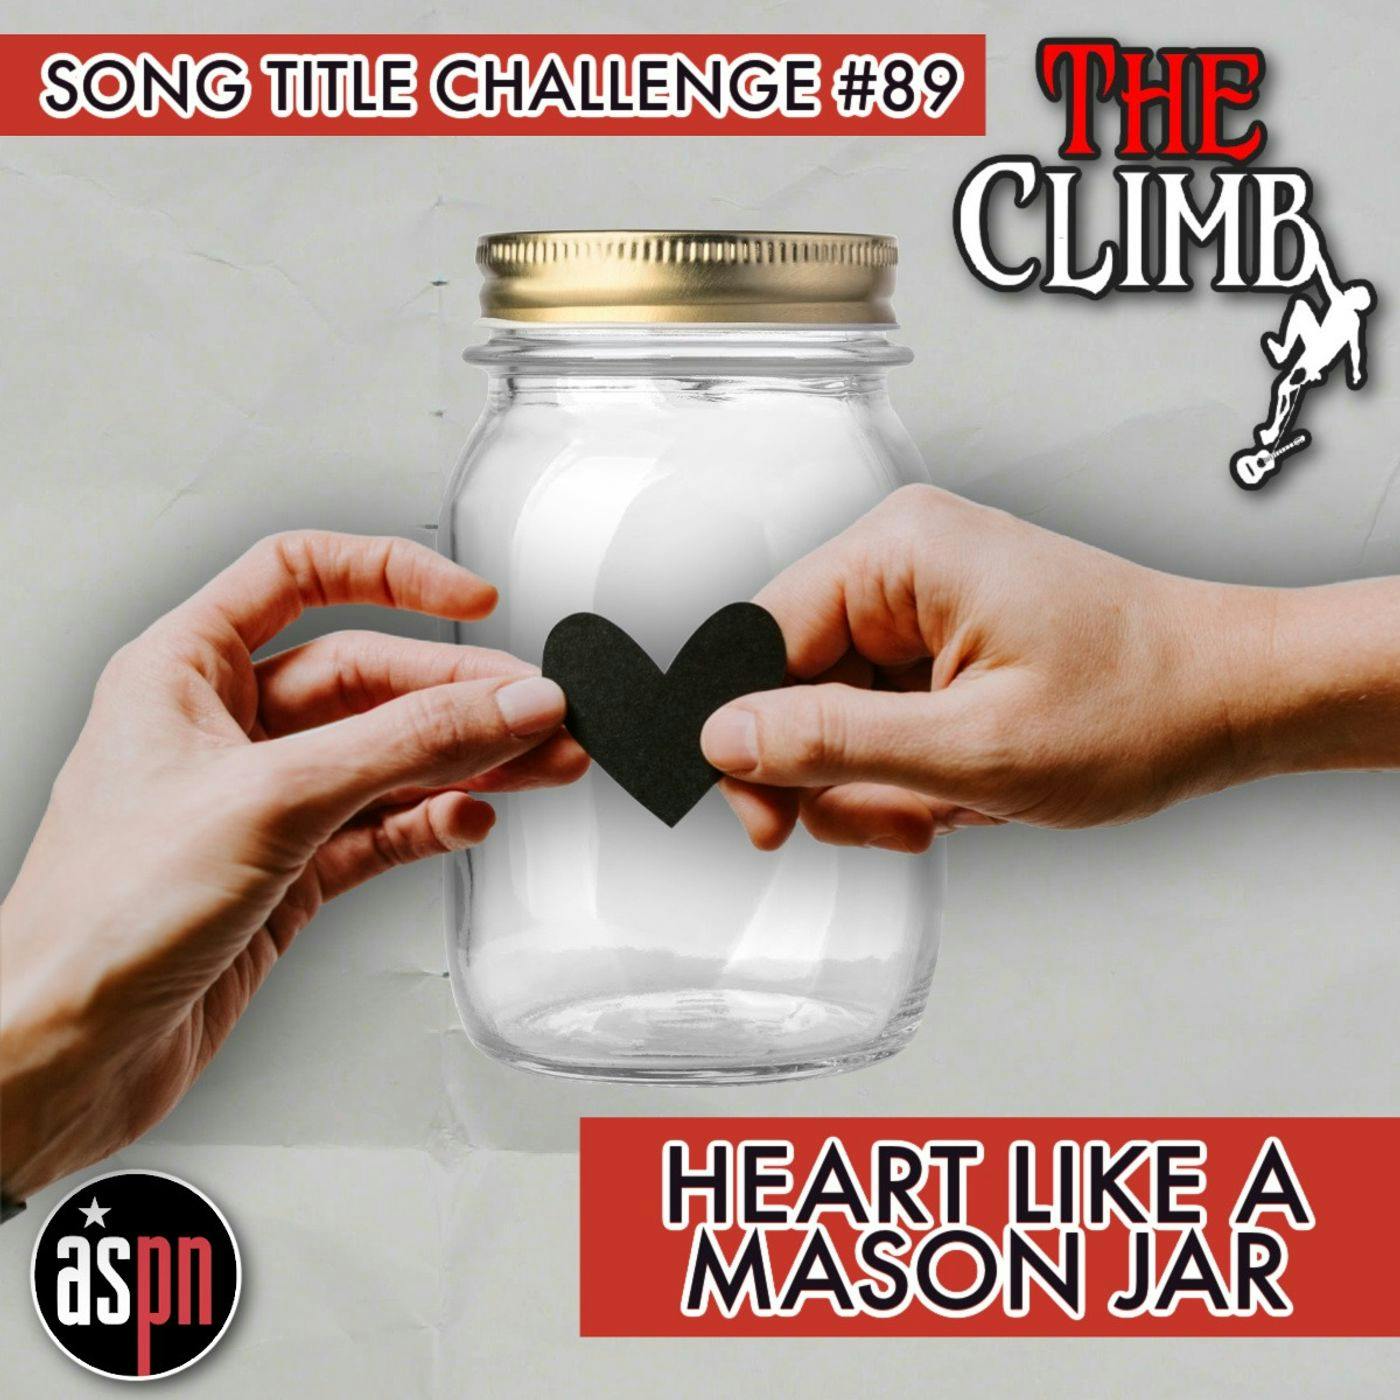 Song Title Challenge #89: Heart Like A Mason Jar